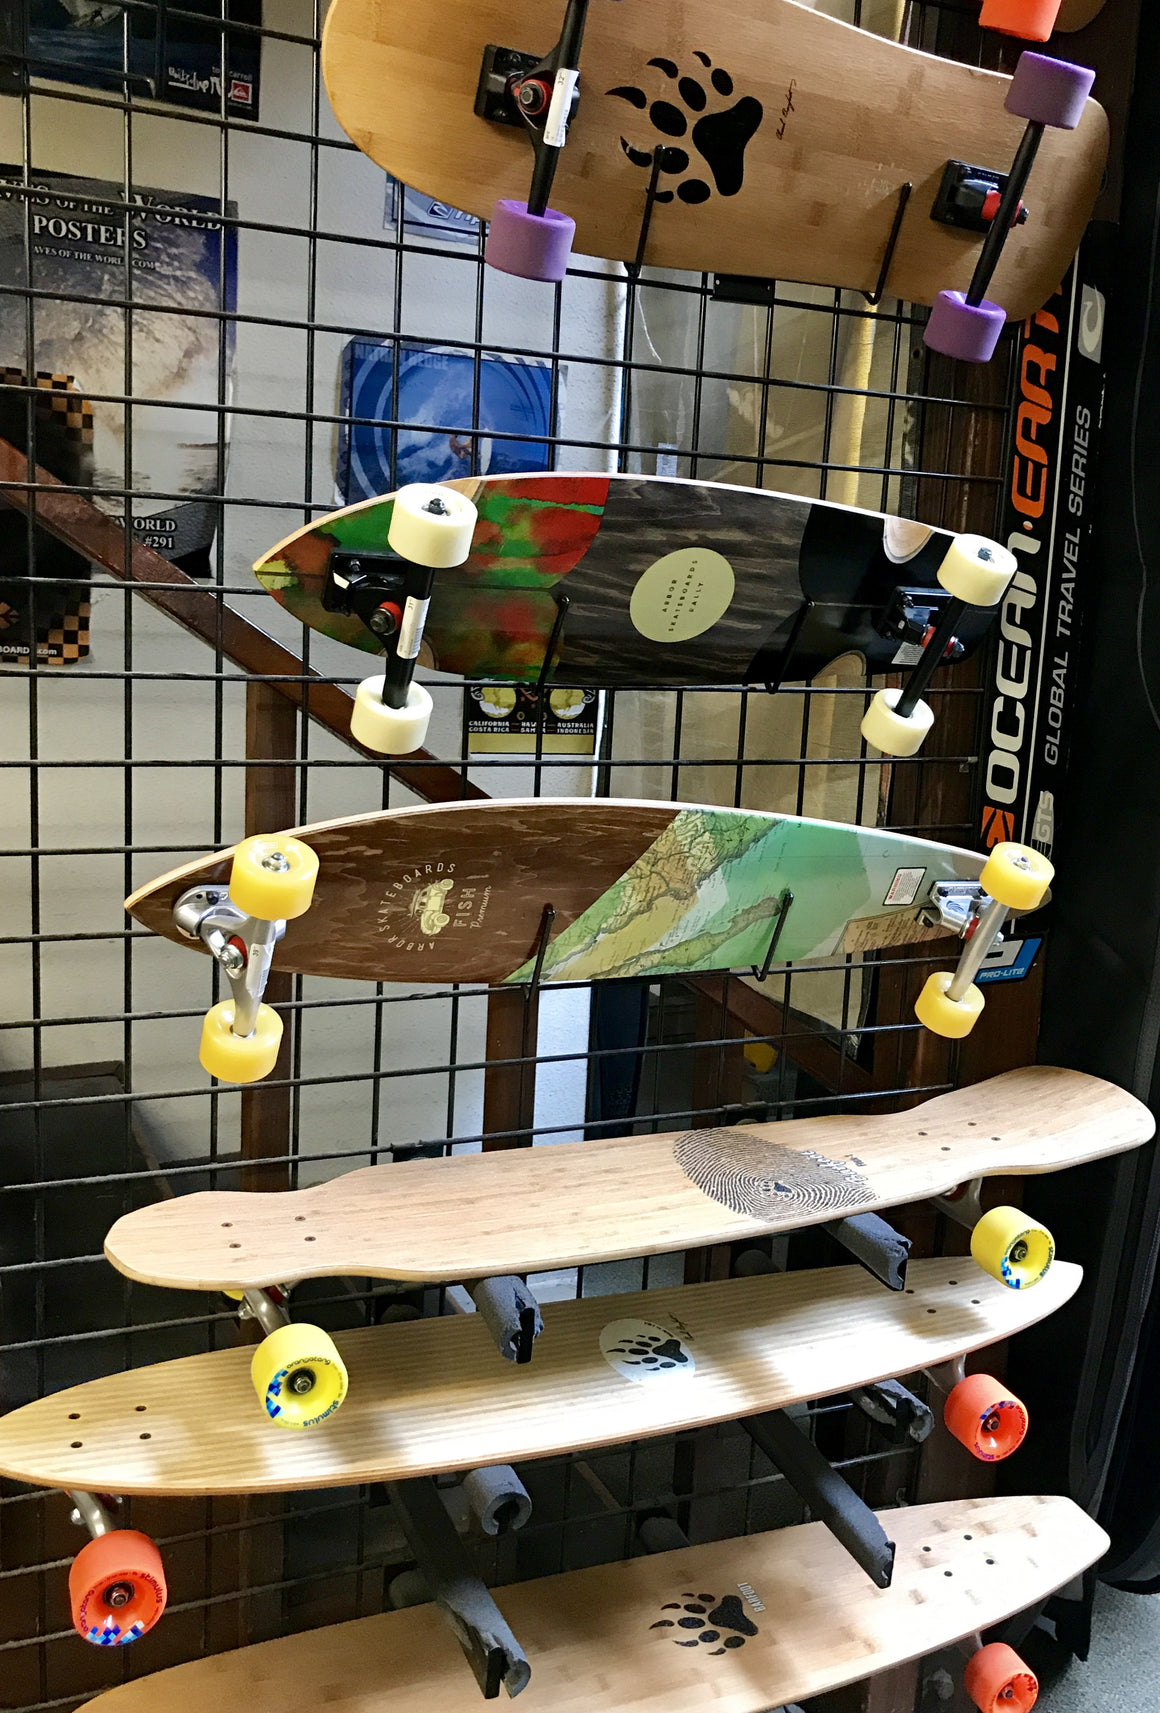 Skate Boards - Ventura Surf Shop